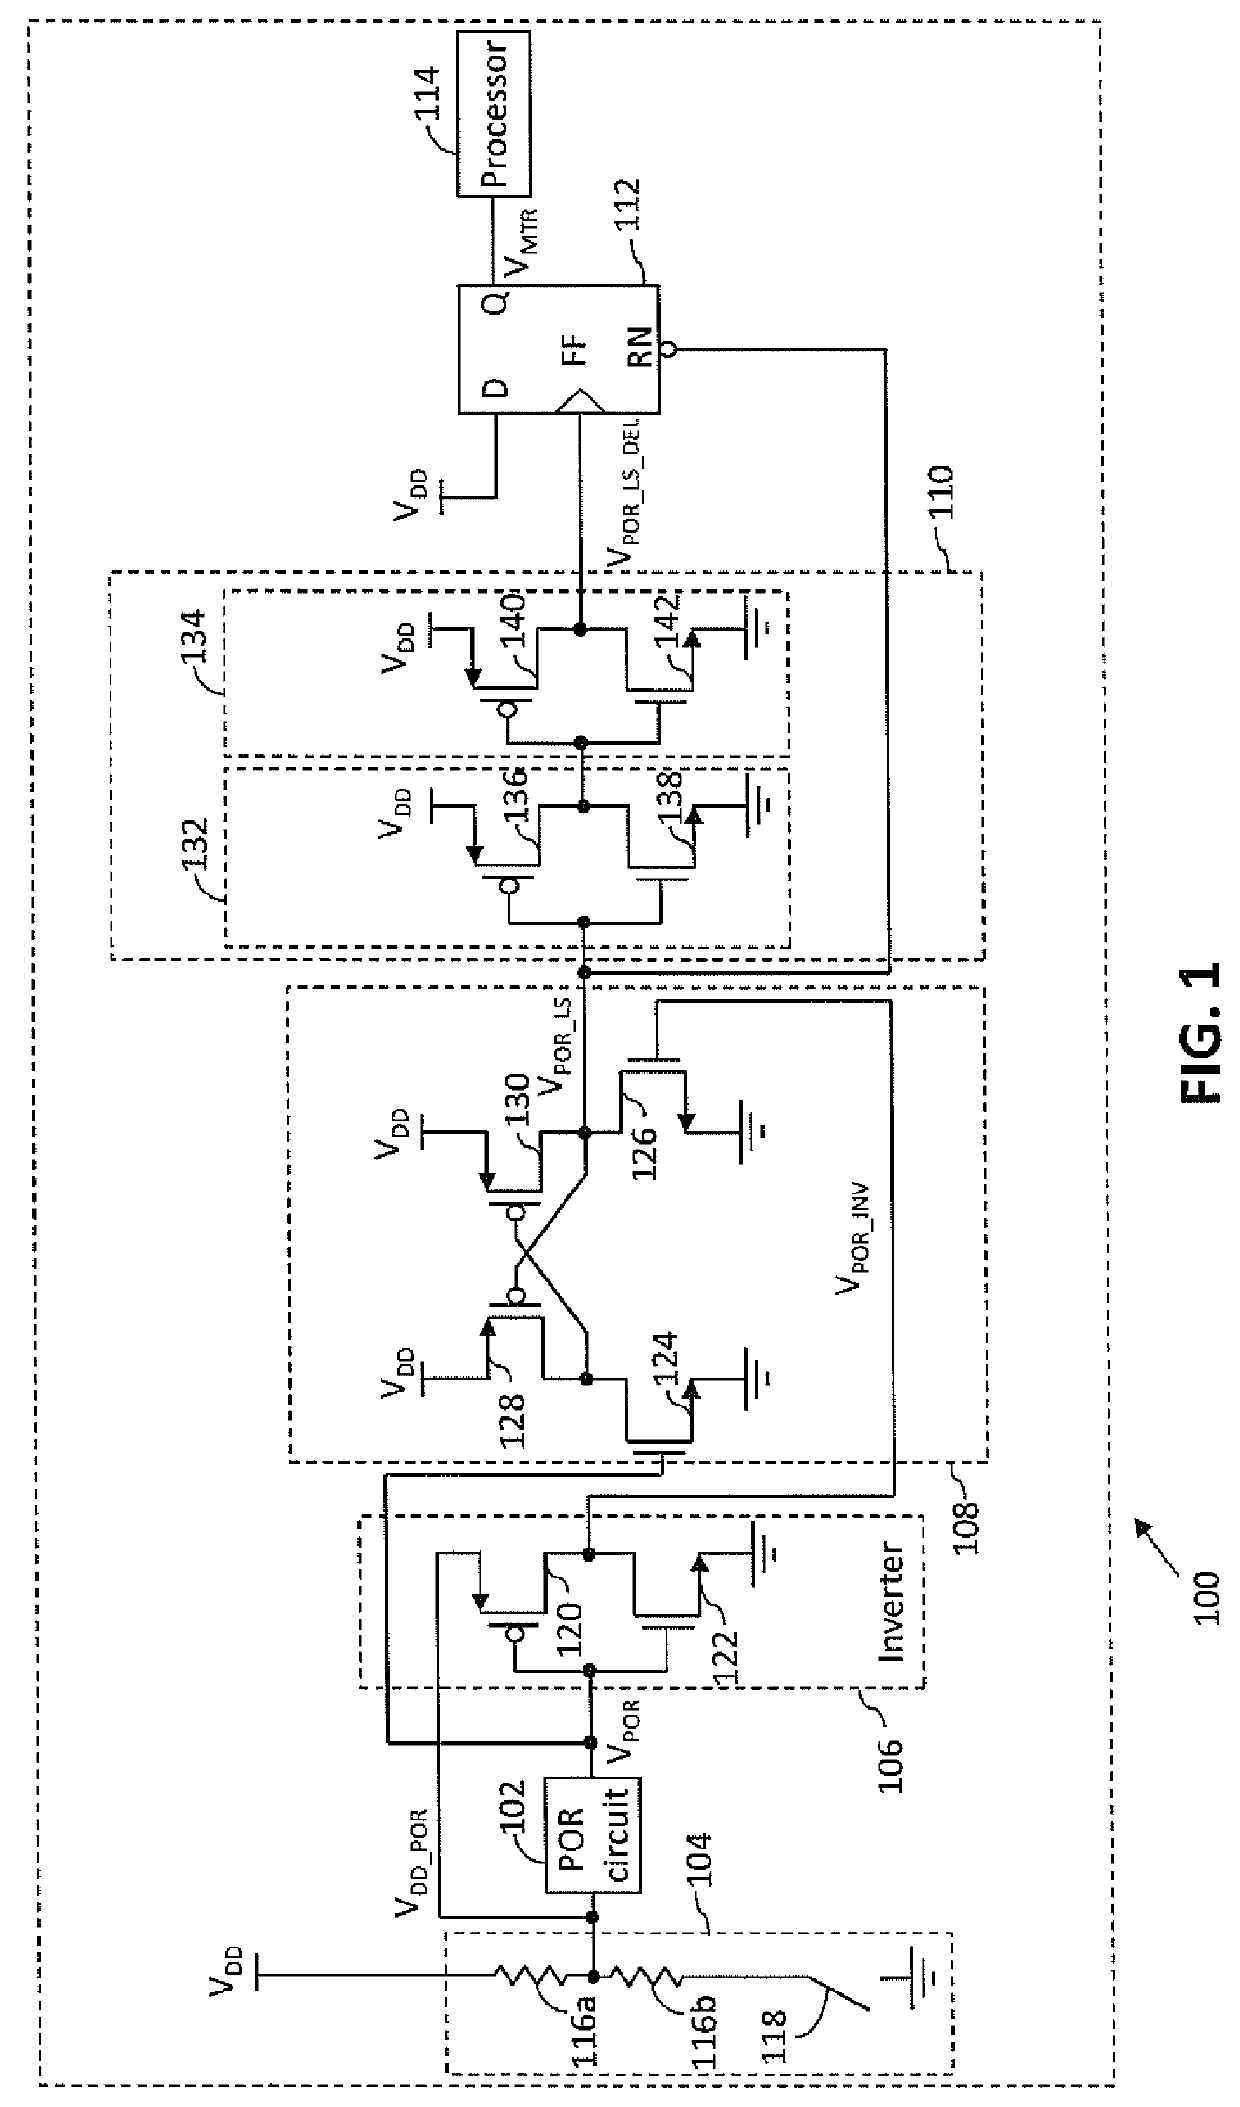 Testable power-on-reset circuit